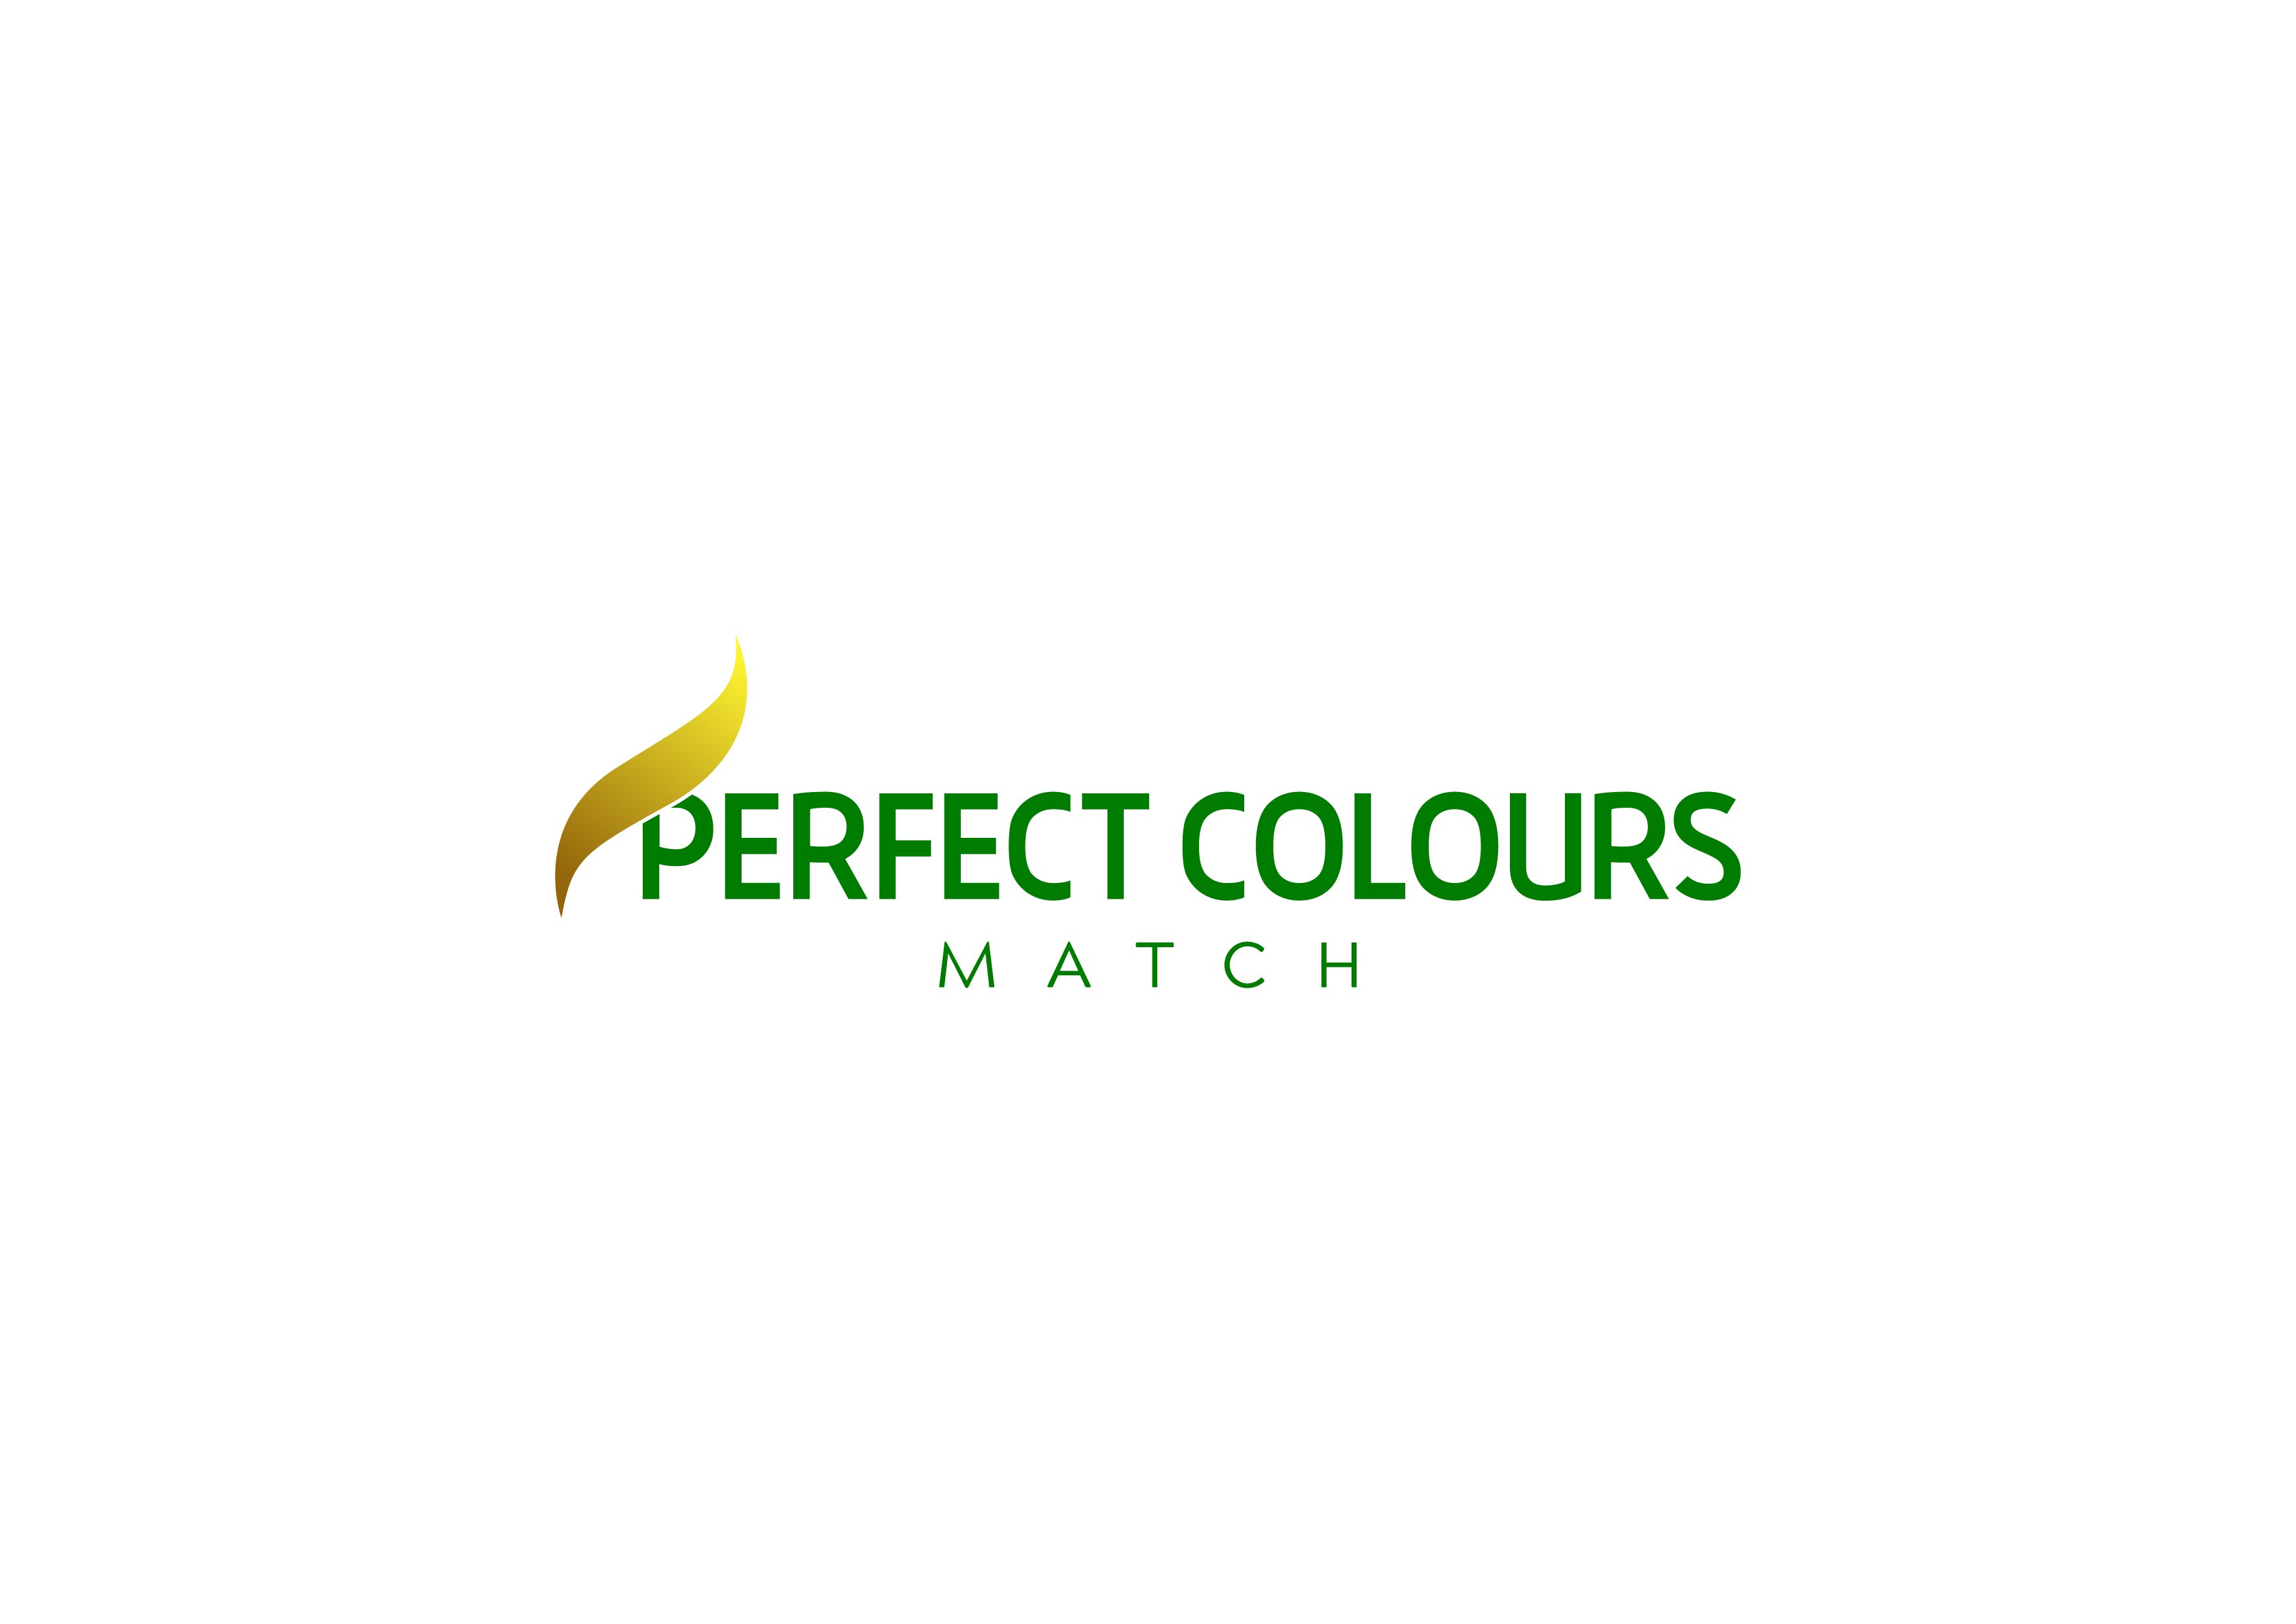 Perfect colours match